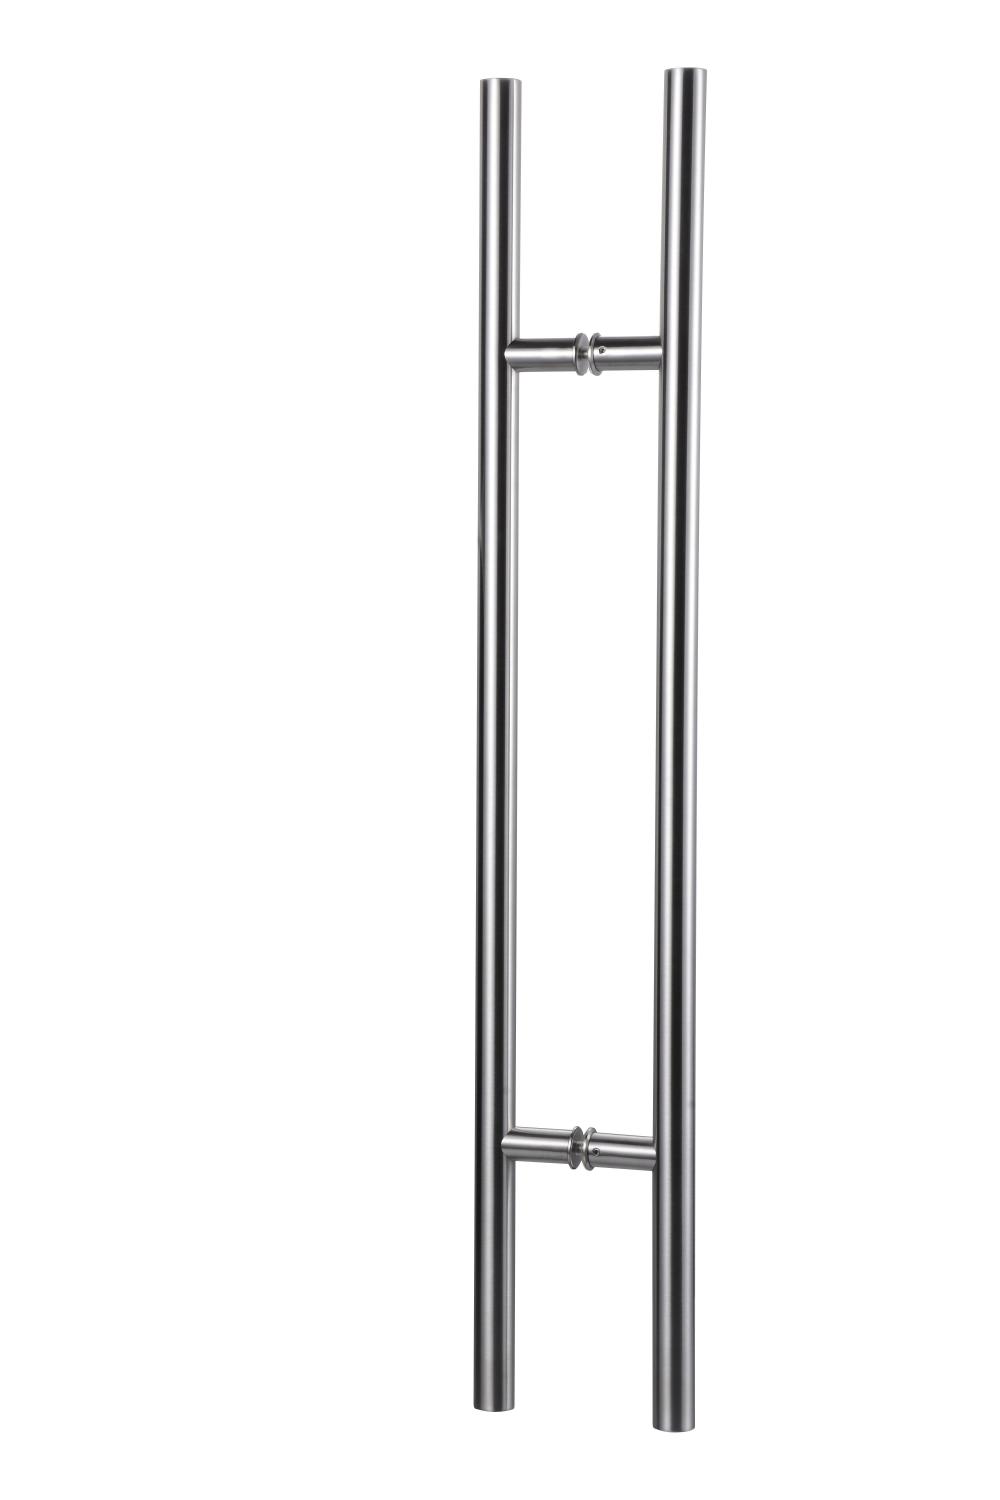 Stainless Steel Ladder Pull Handles